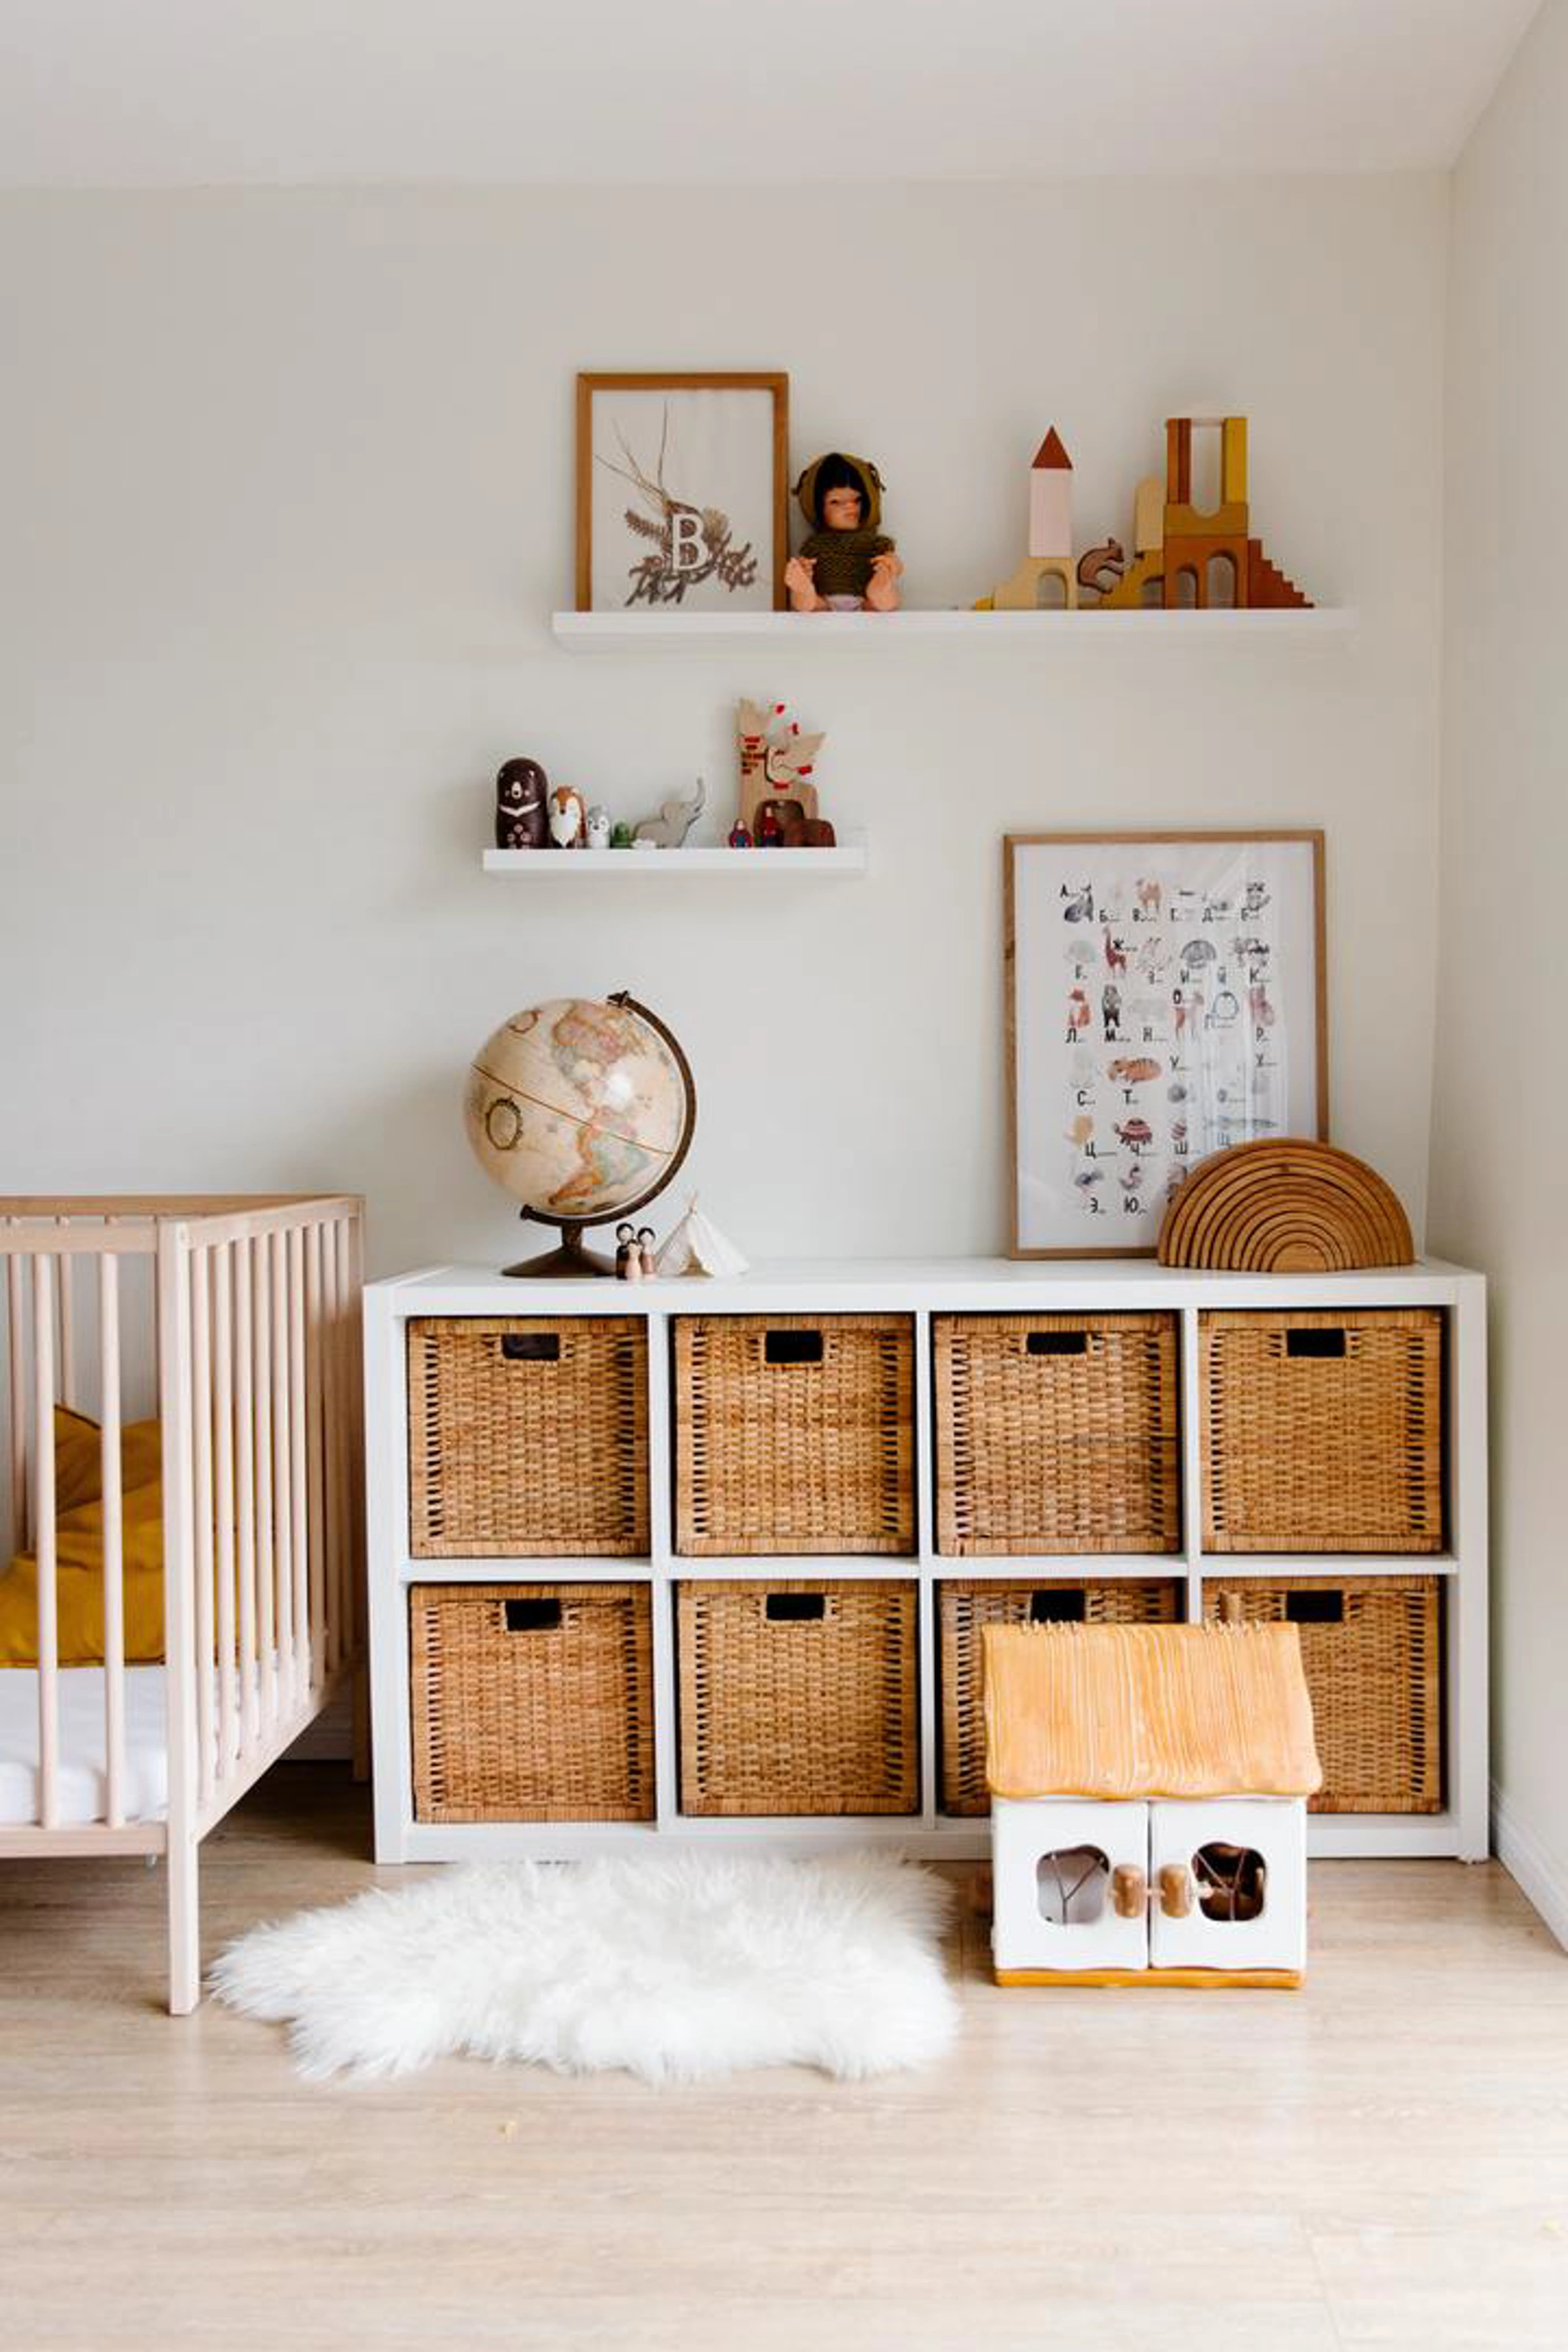 Kids bedroom with rattan basket storage